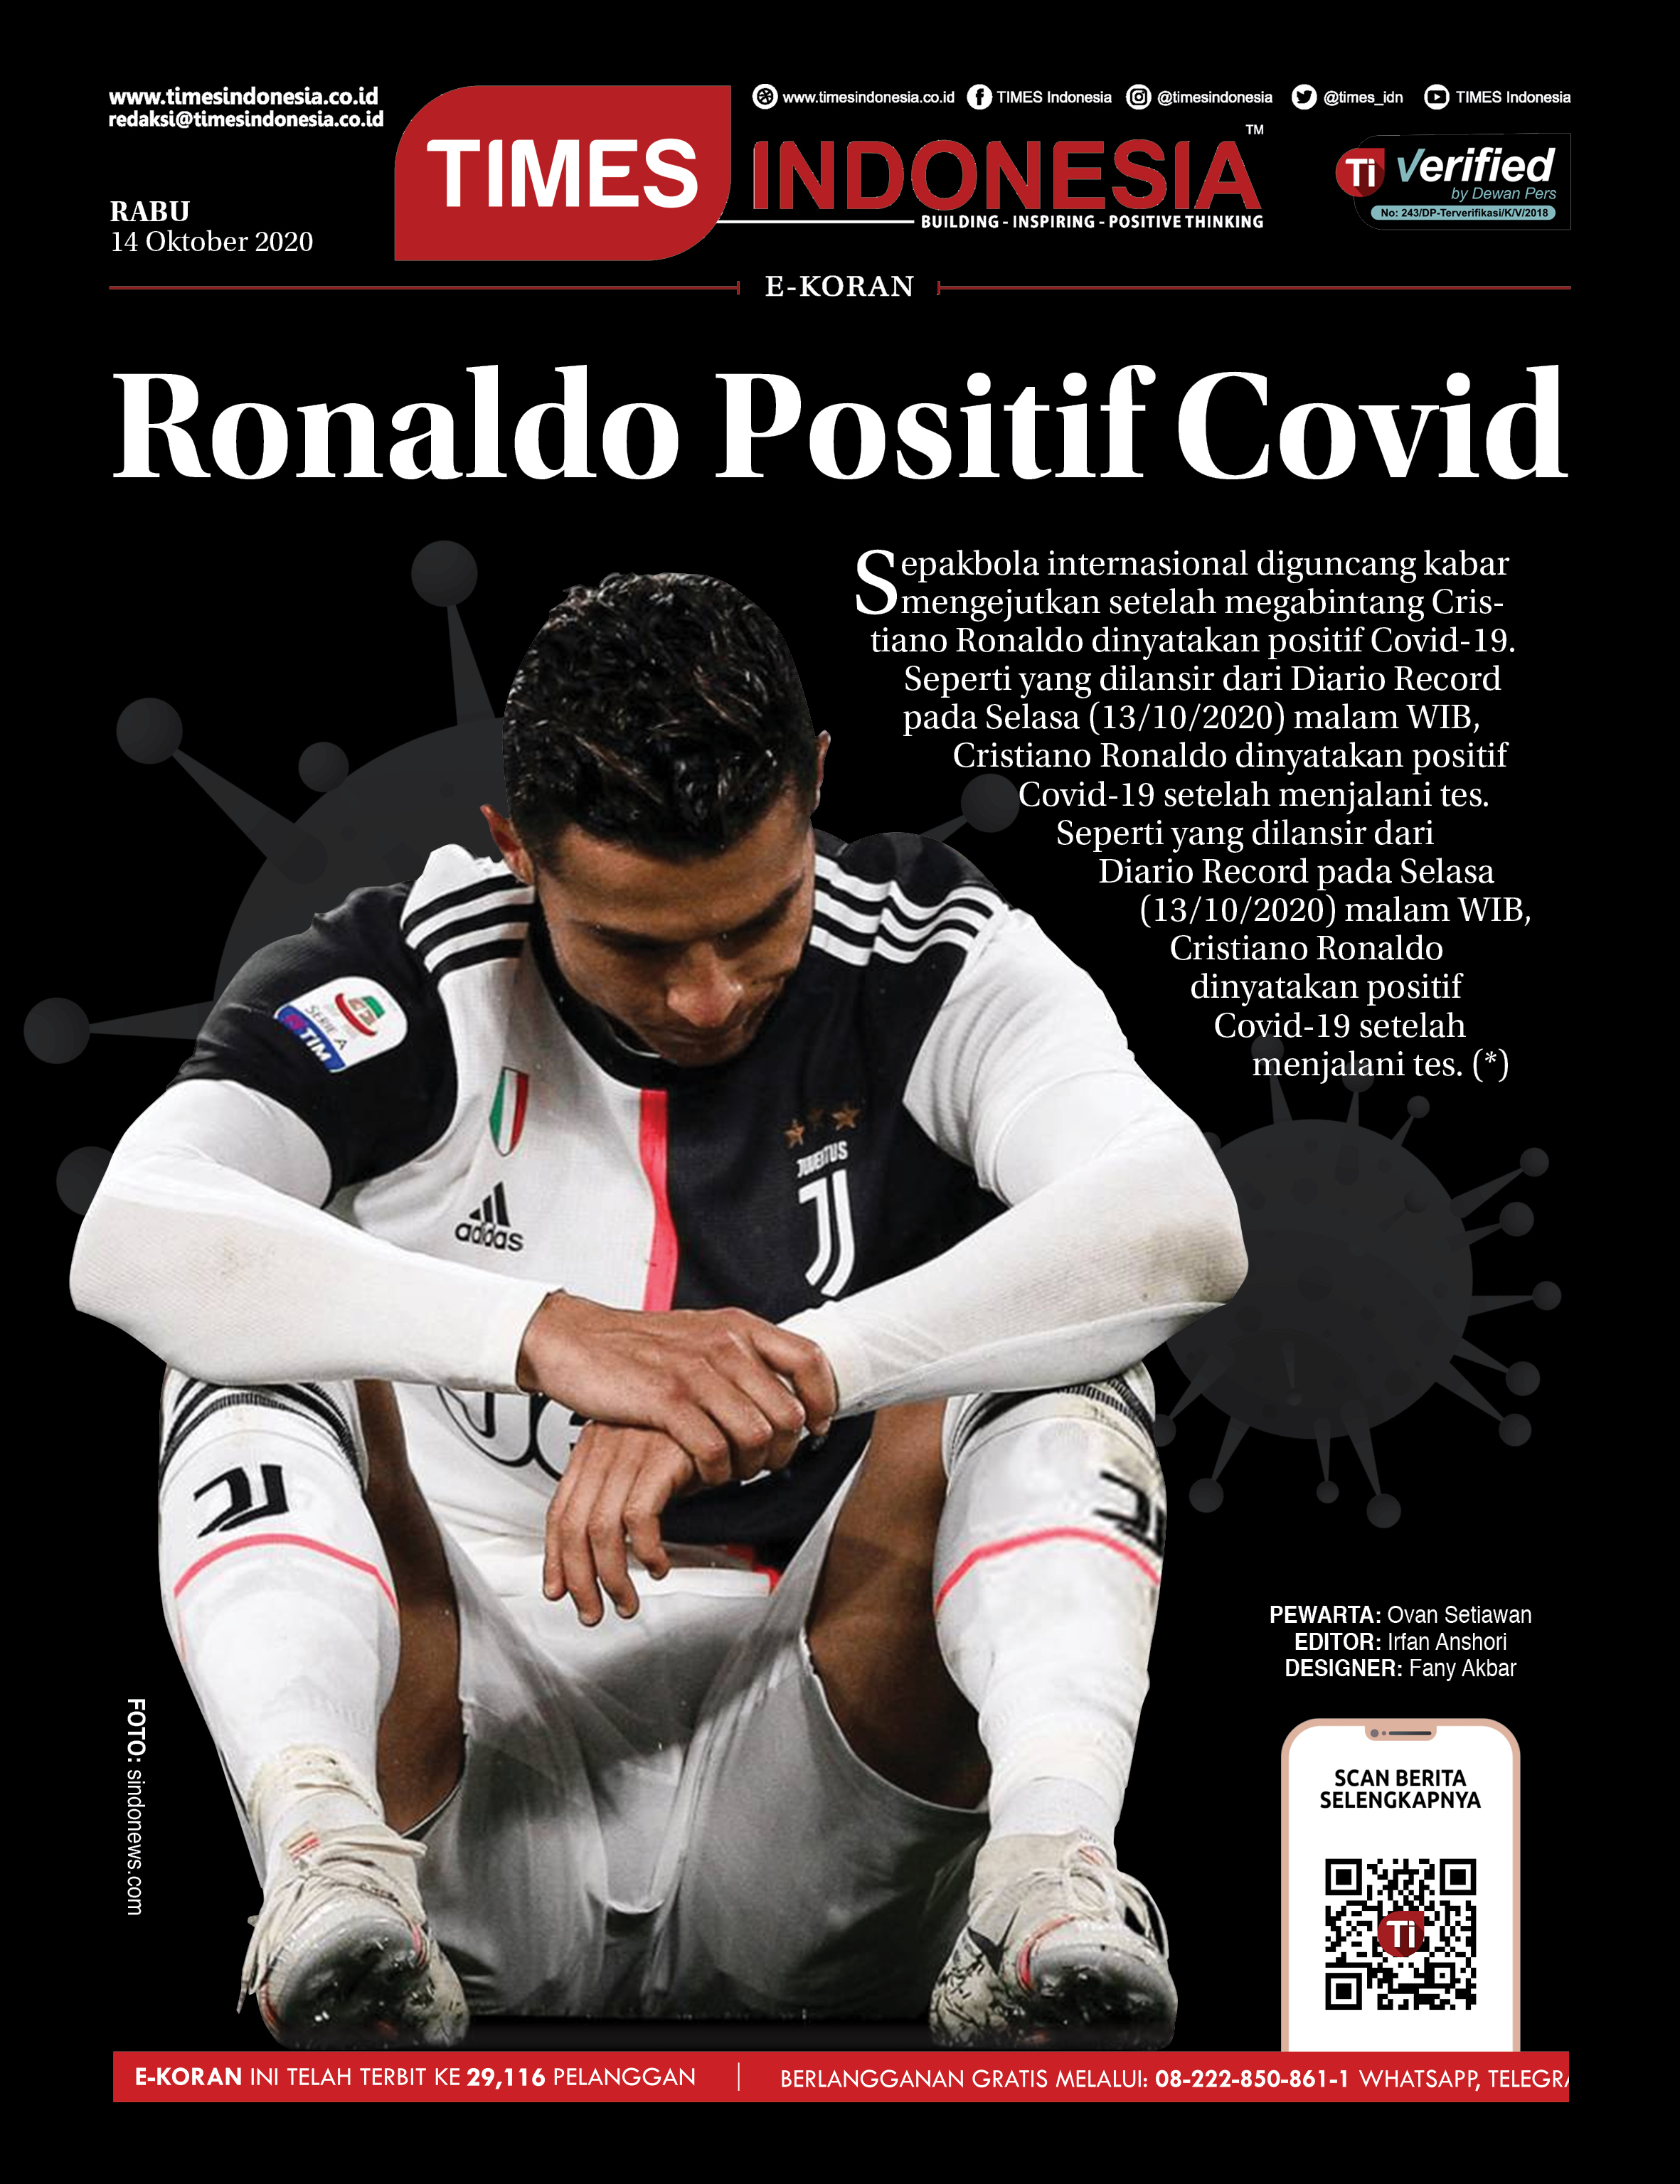 Ekoran-14-10-2020-Ronaldo-Positif-Covid.jpg